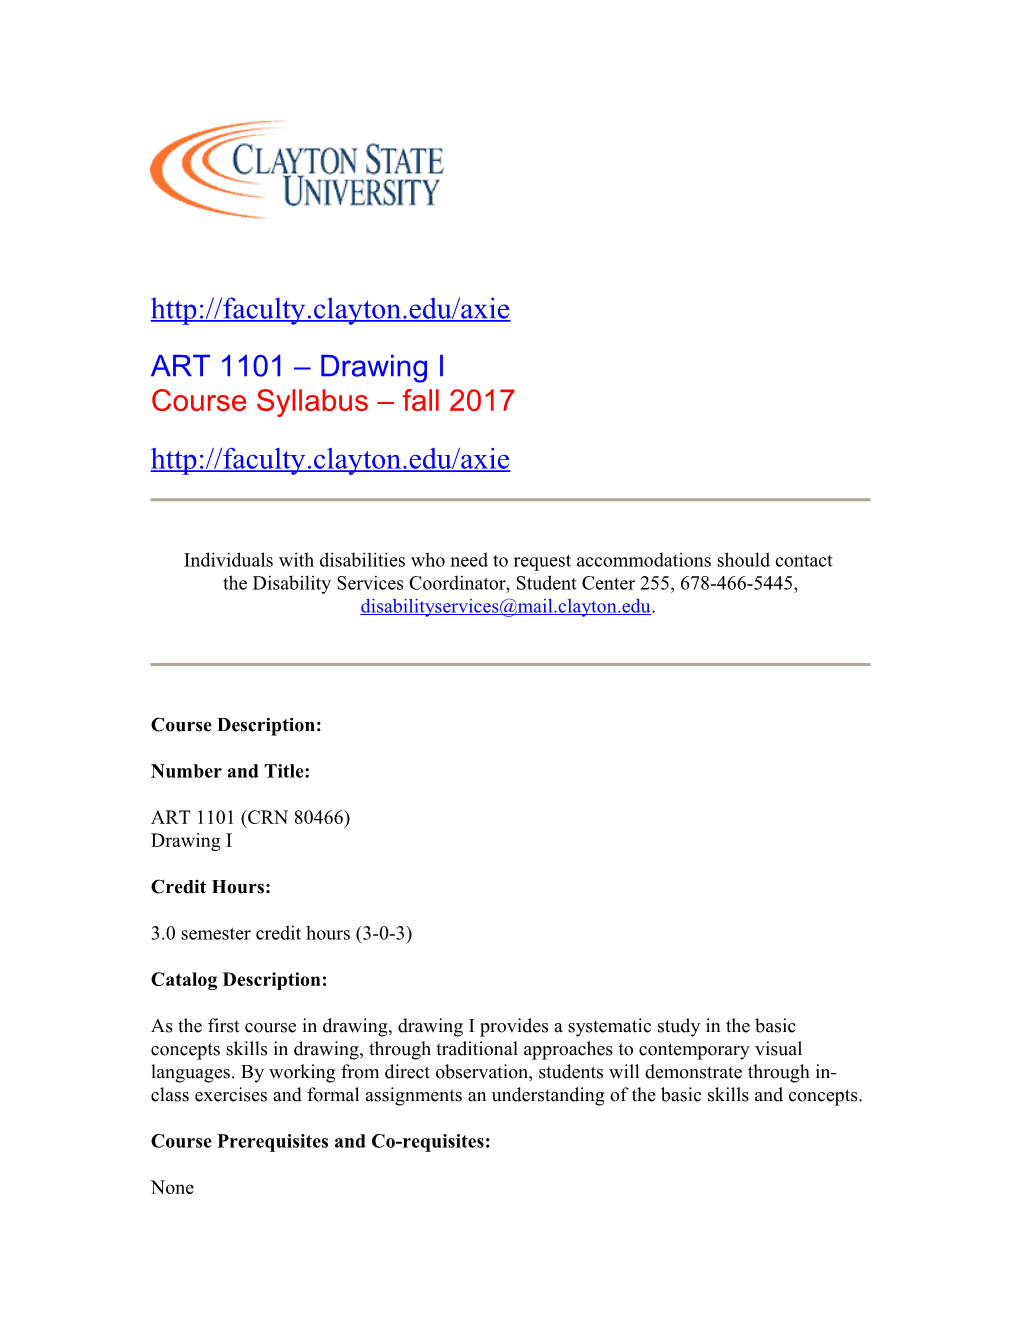 ART1101 Drawing I Course Syllabus Fall2017